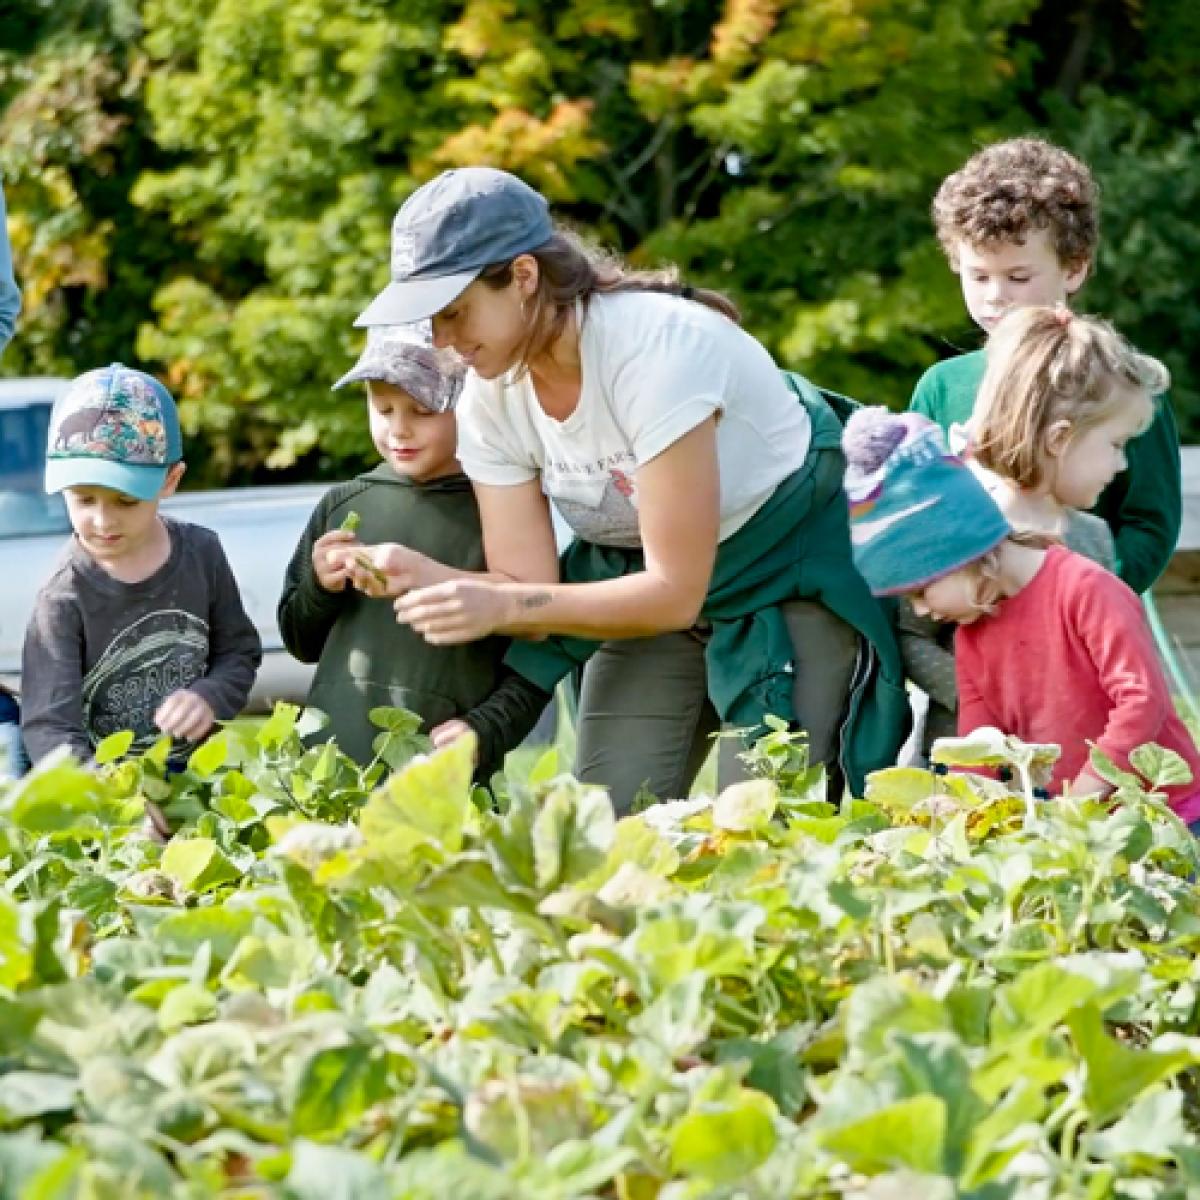 Kids gather around a garden, harvesting vegetables to pickle.